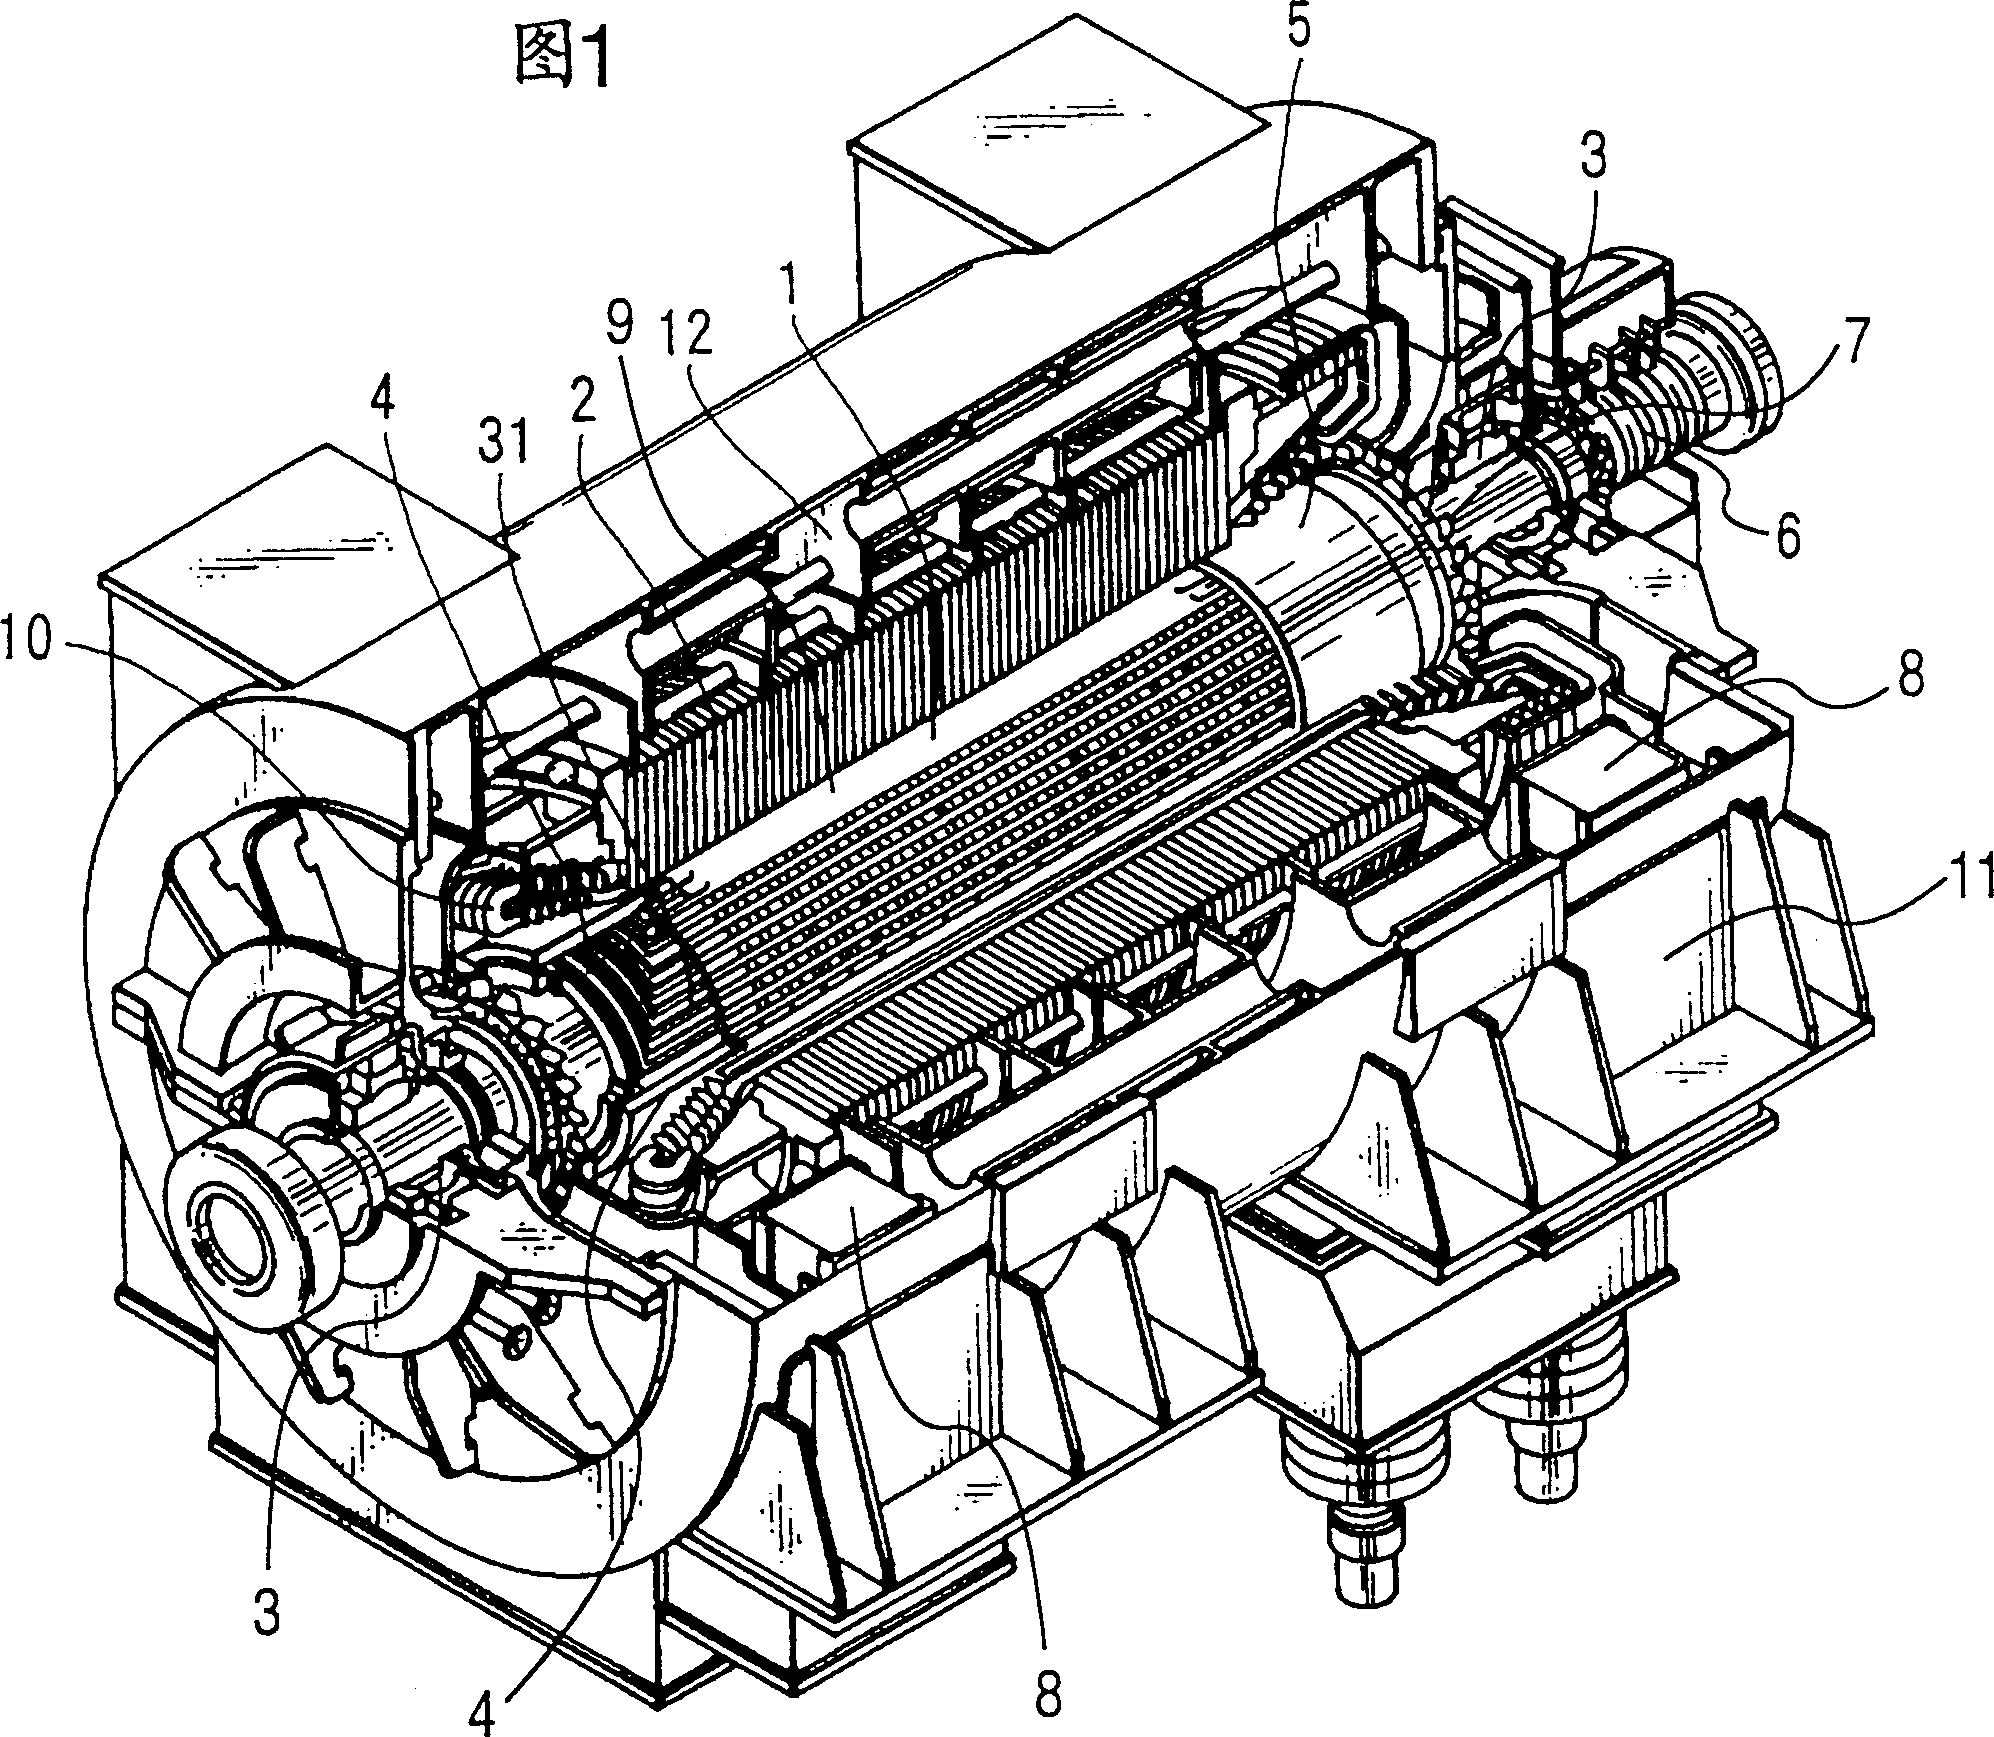 Rotary electric generator